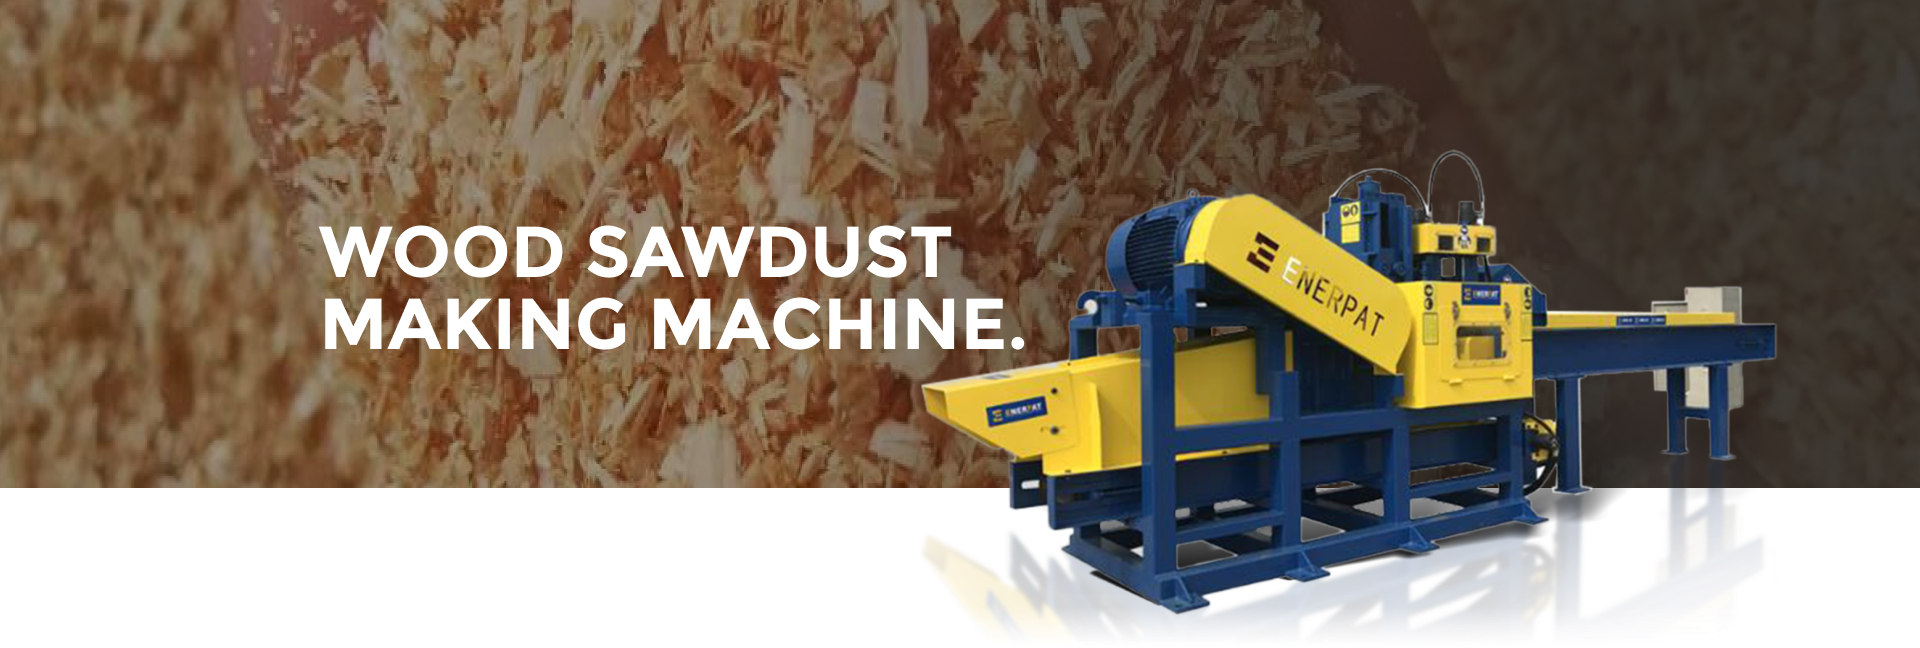 Wood Sawdust Making Machine